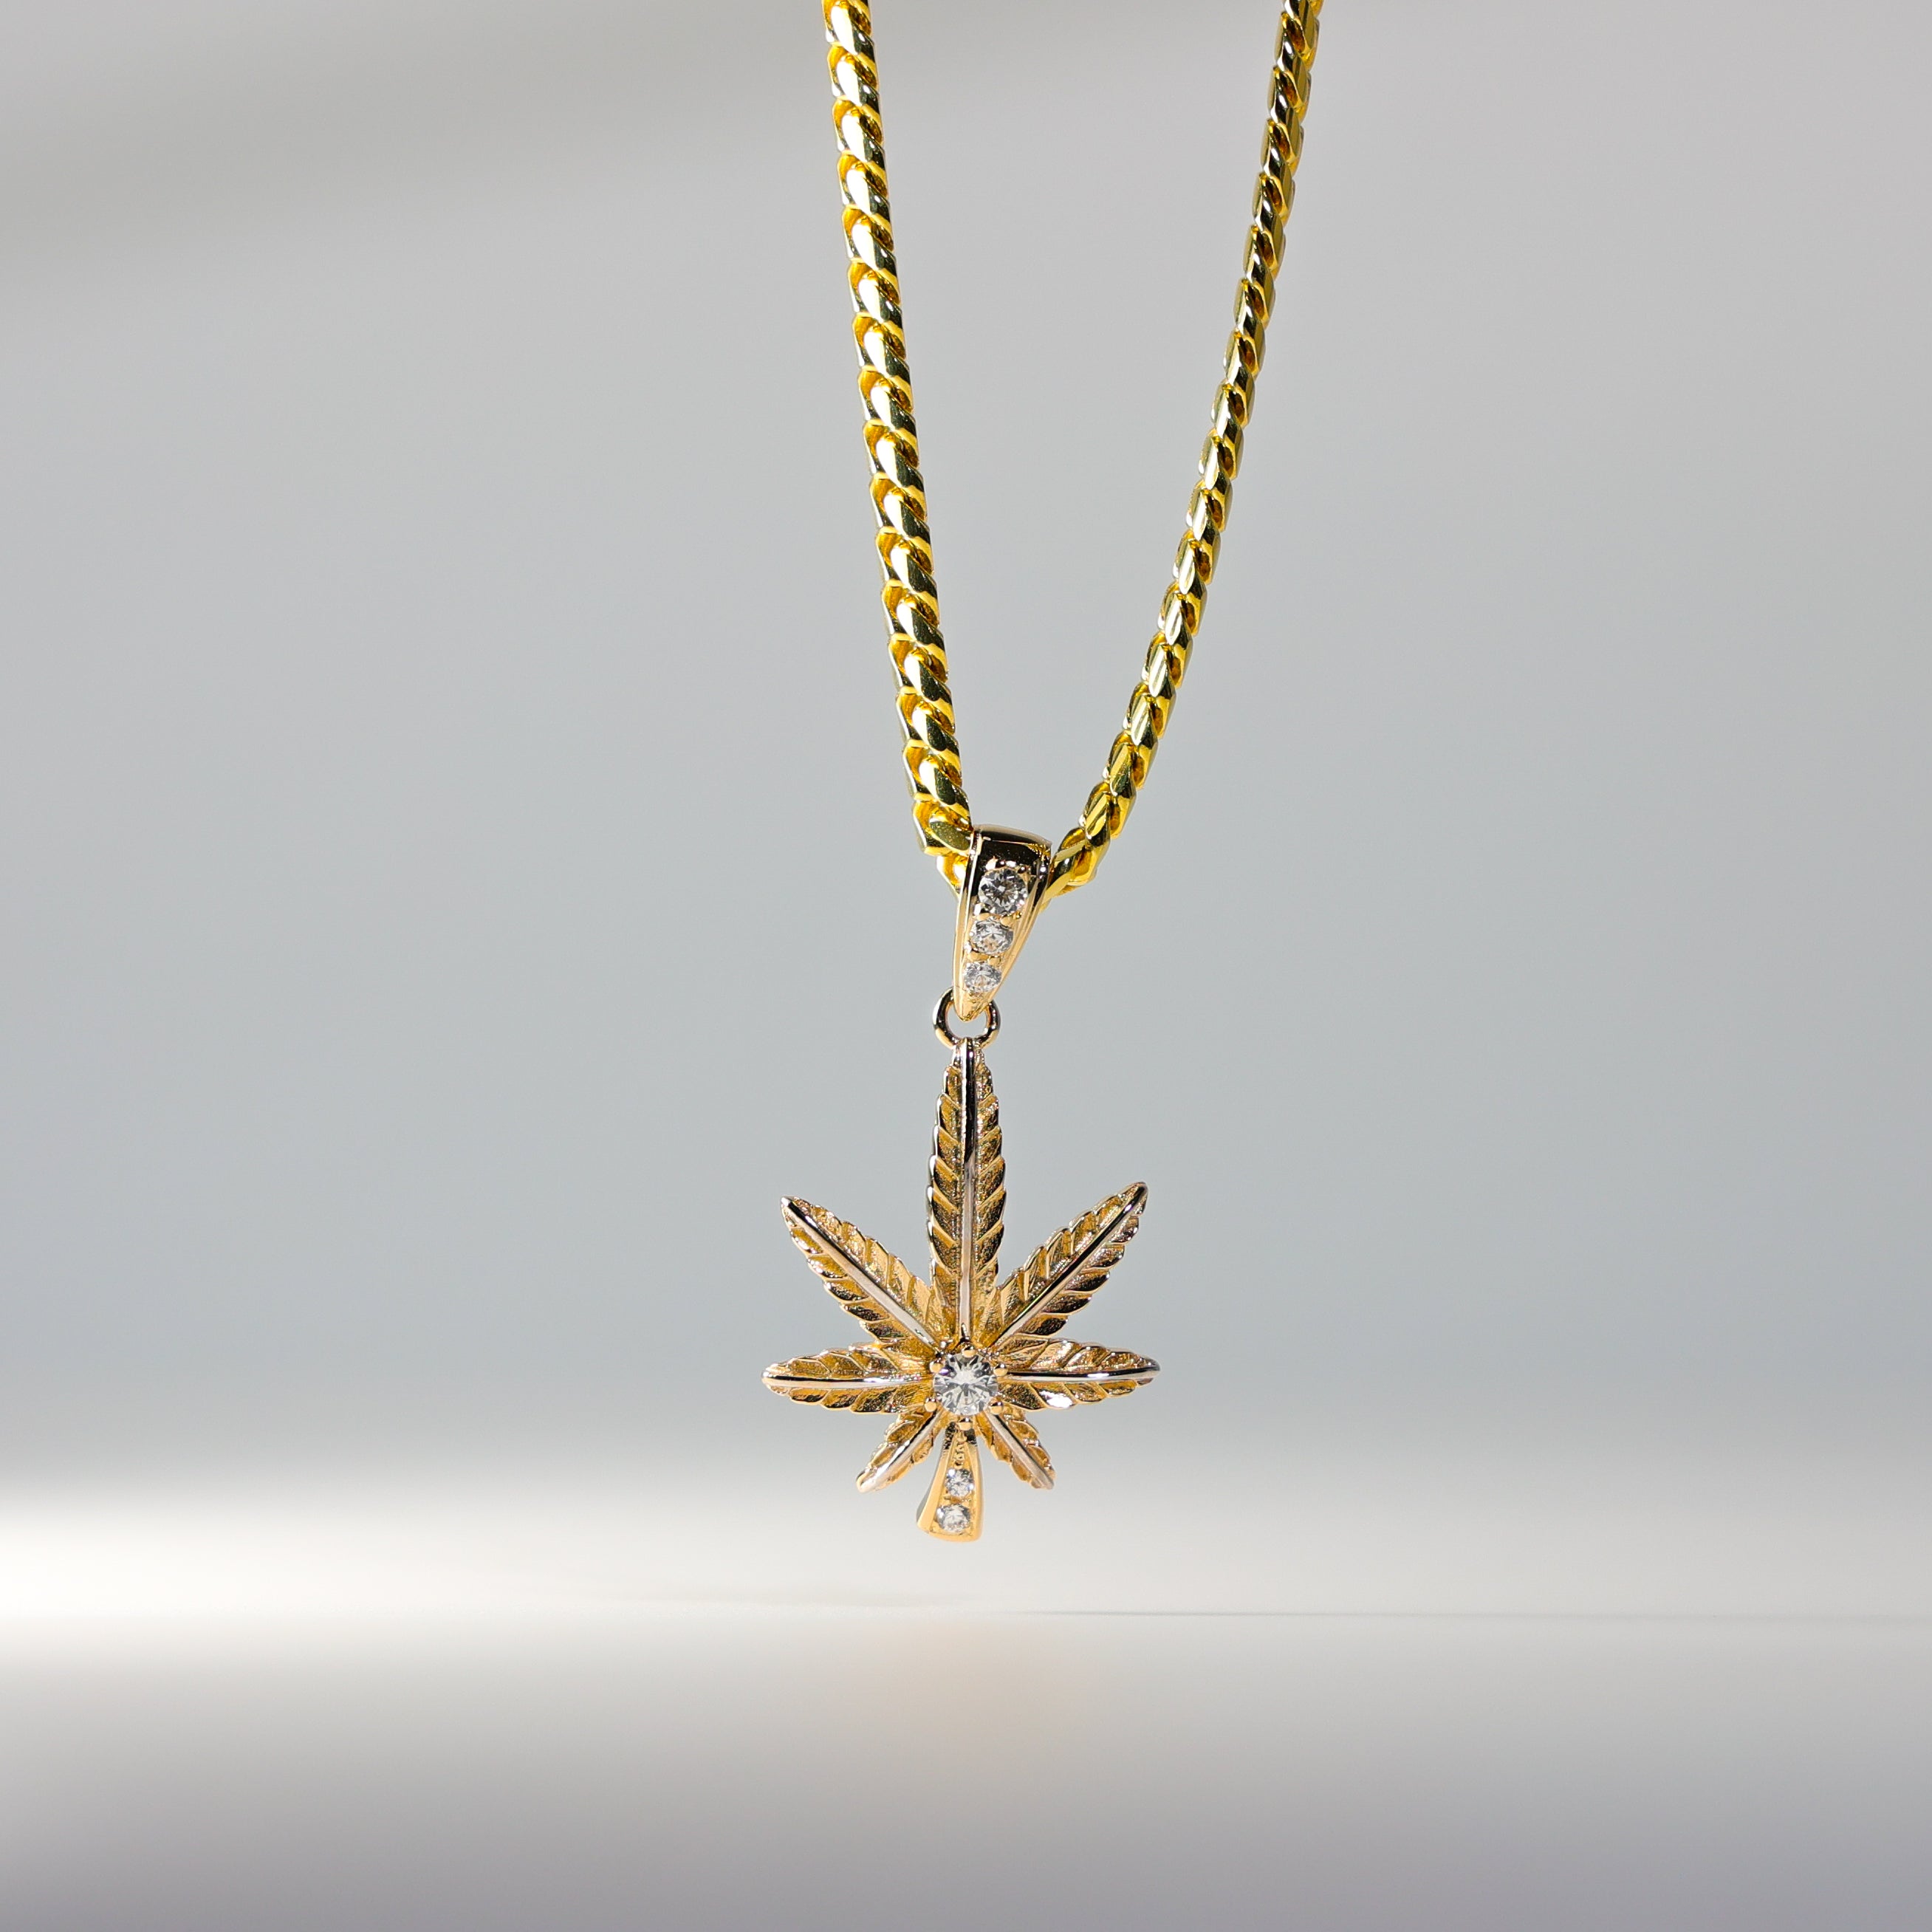 Gold Marijuana Leaf Pendant Model-1570 - Charlie & Co. Jewelry